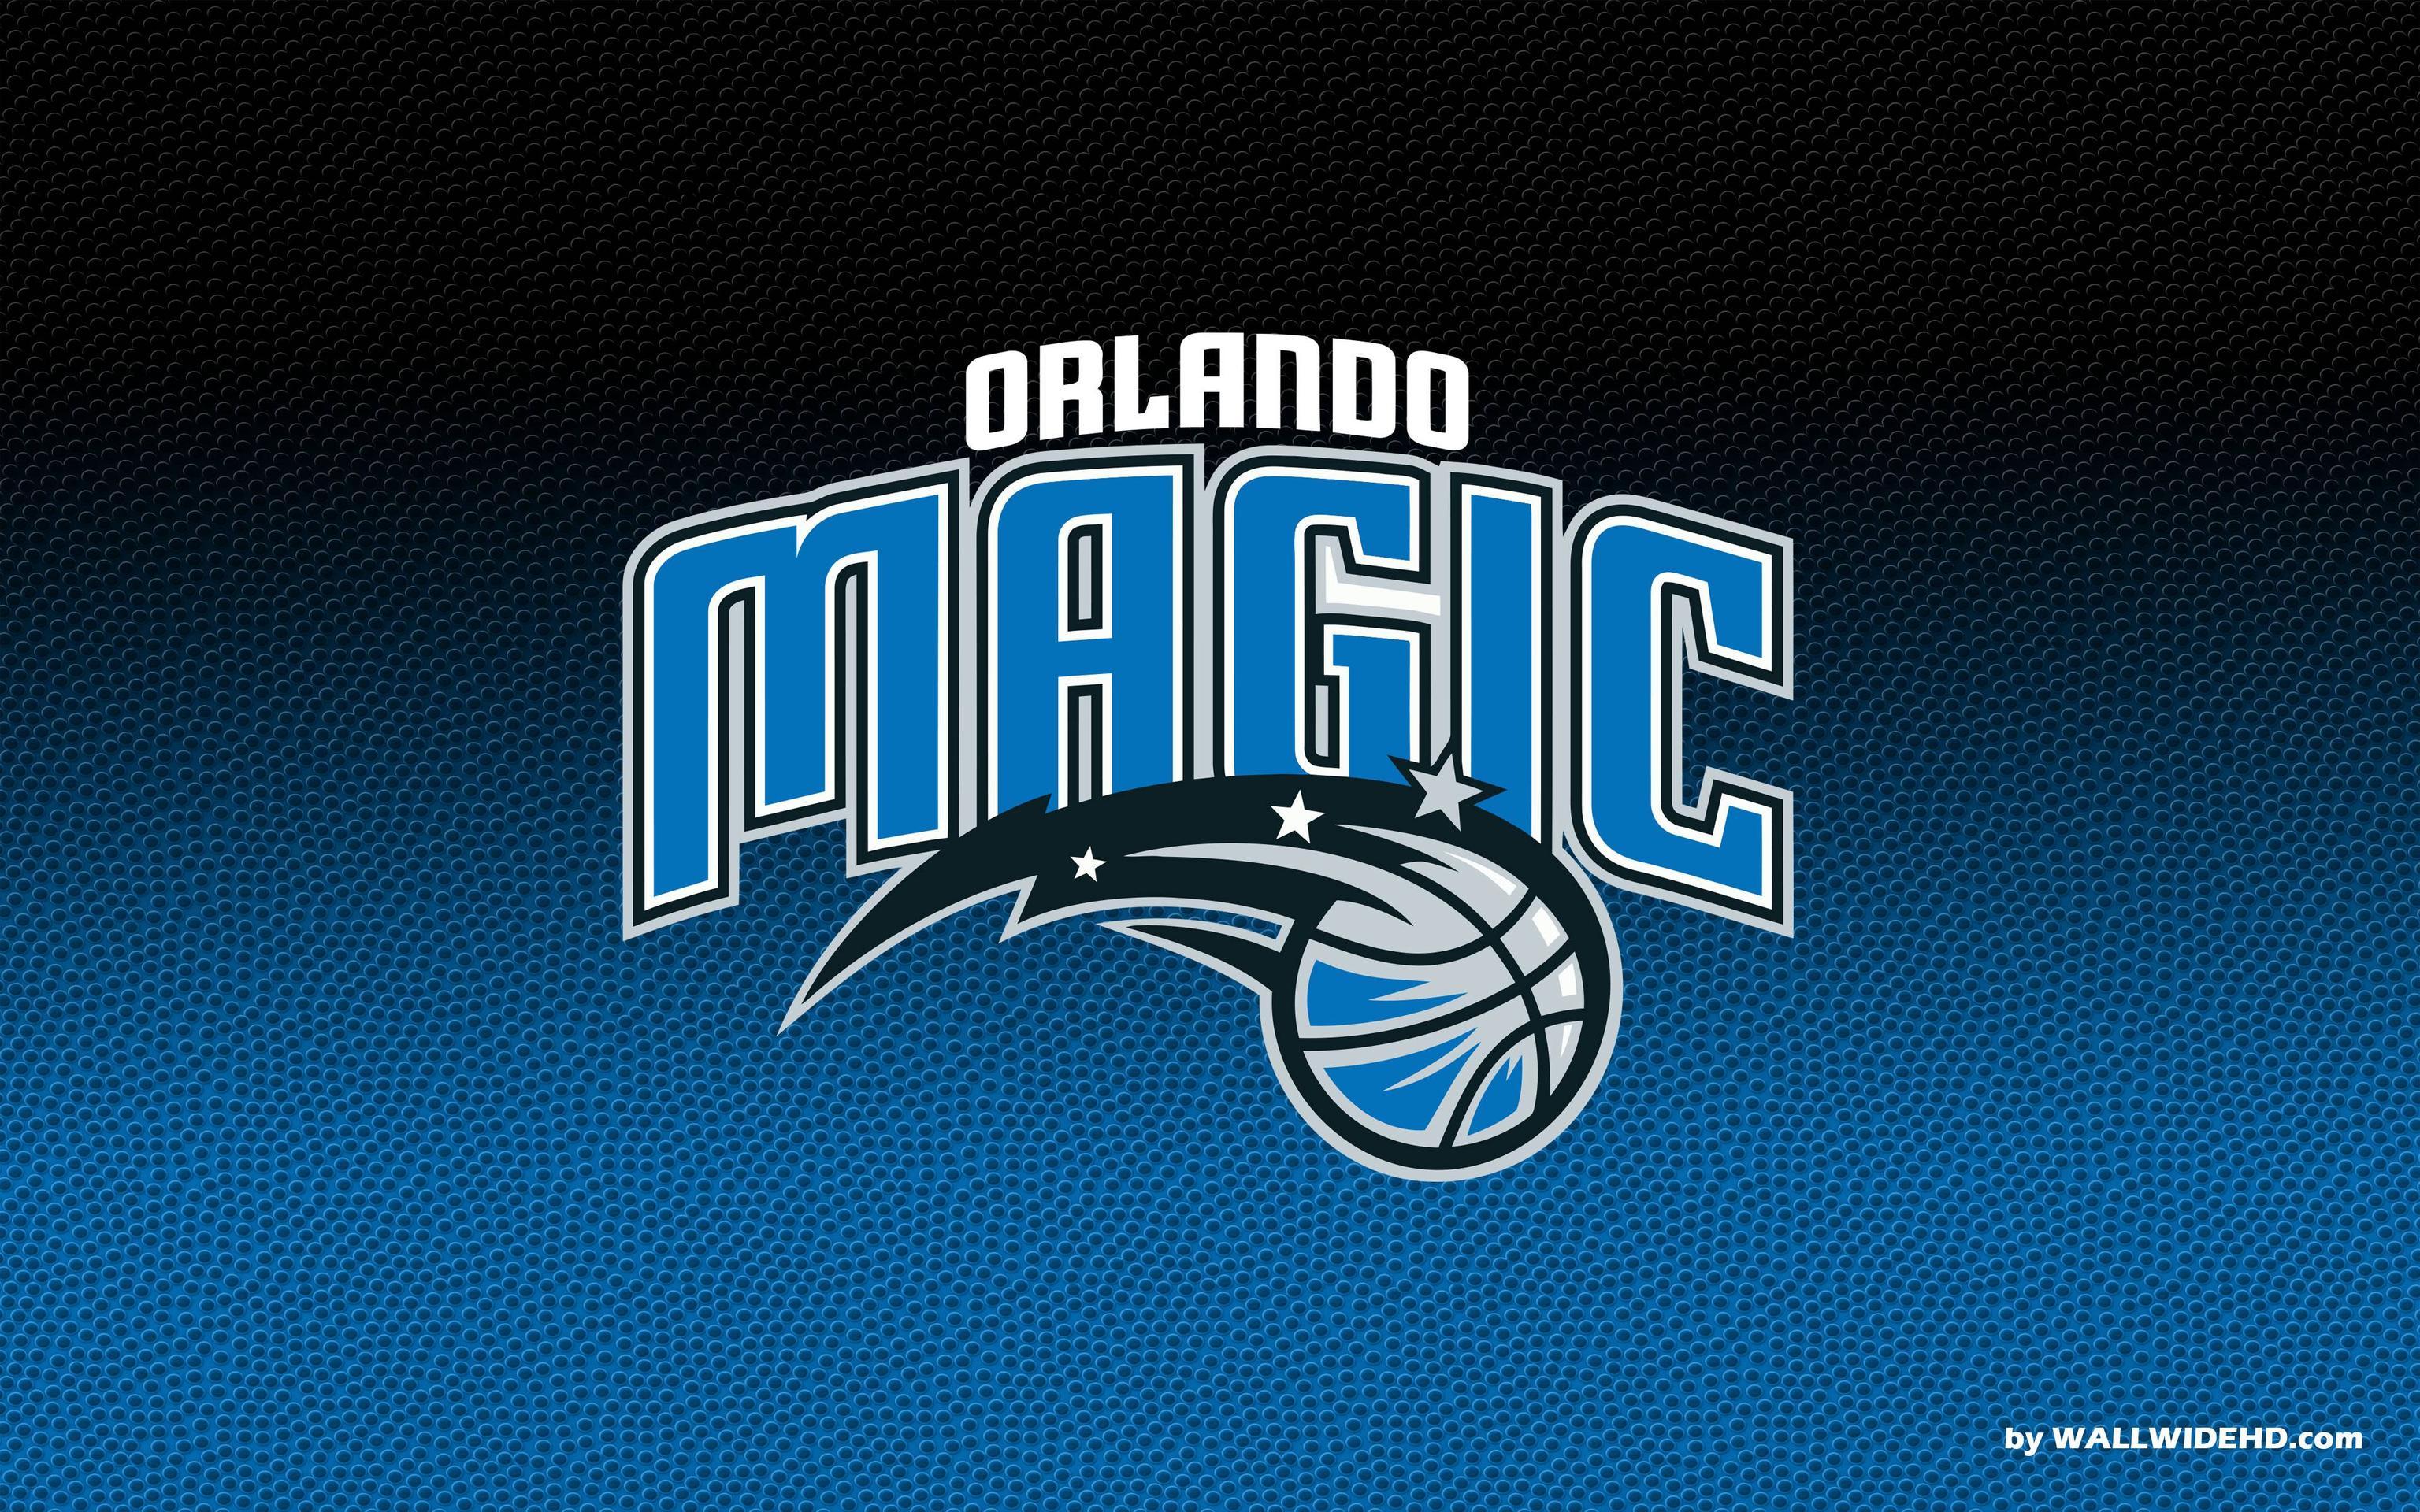 Orlando Magic 2014 Logo NBA Wallpaper Wide or HD